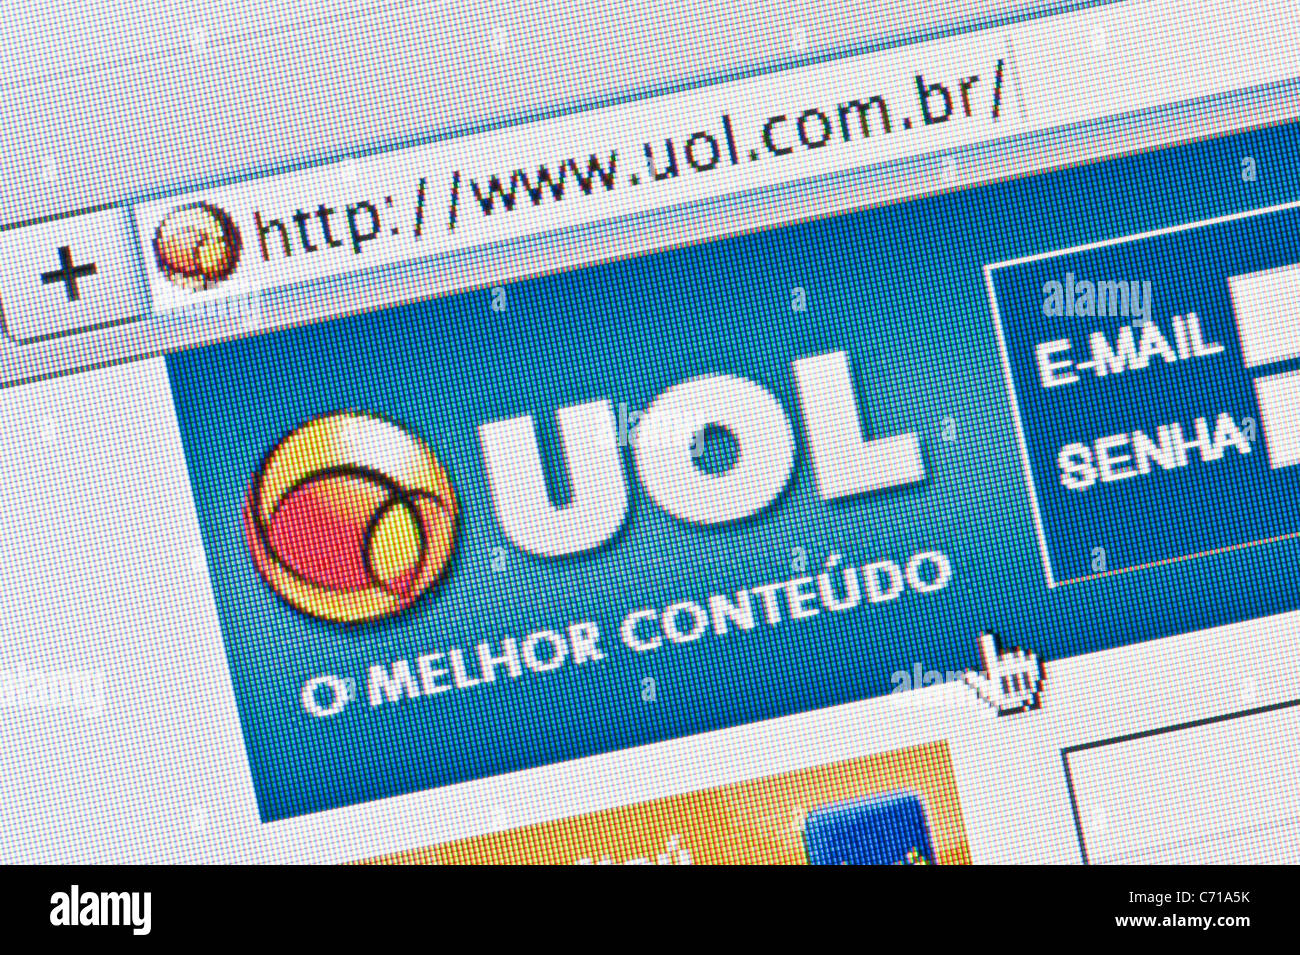 UOL Webmail - UOL Mail